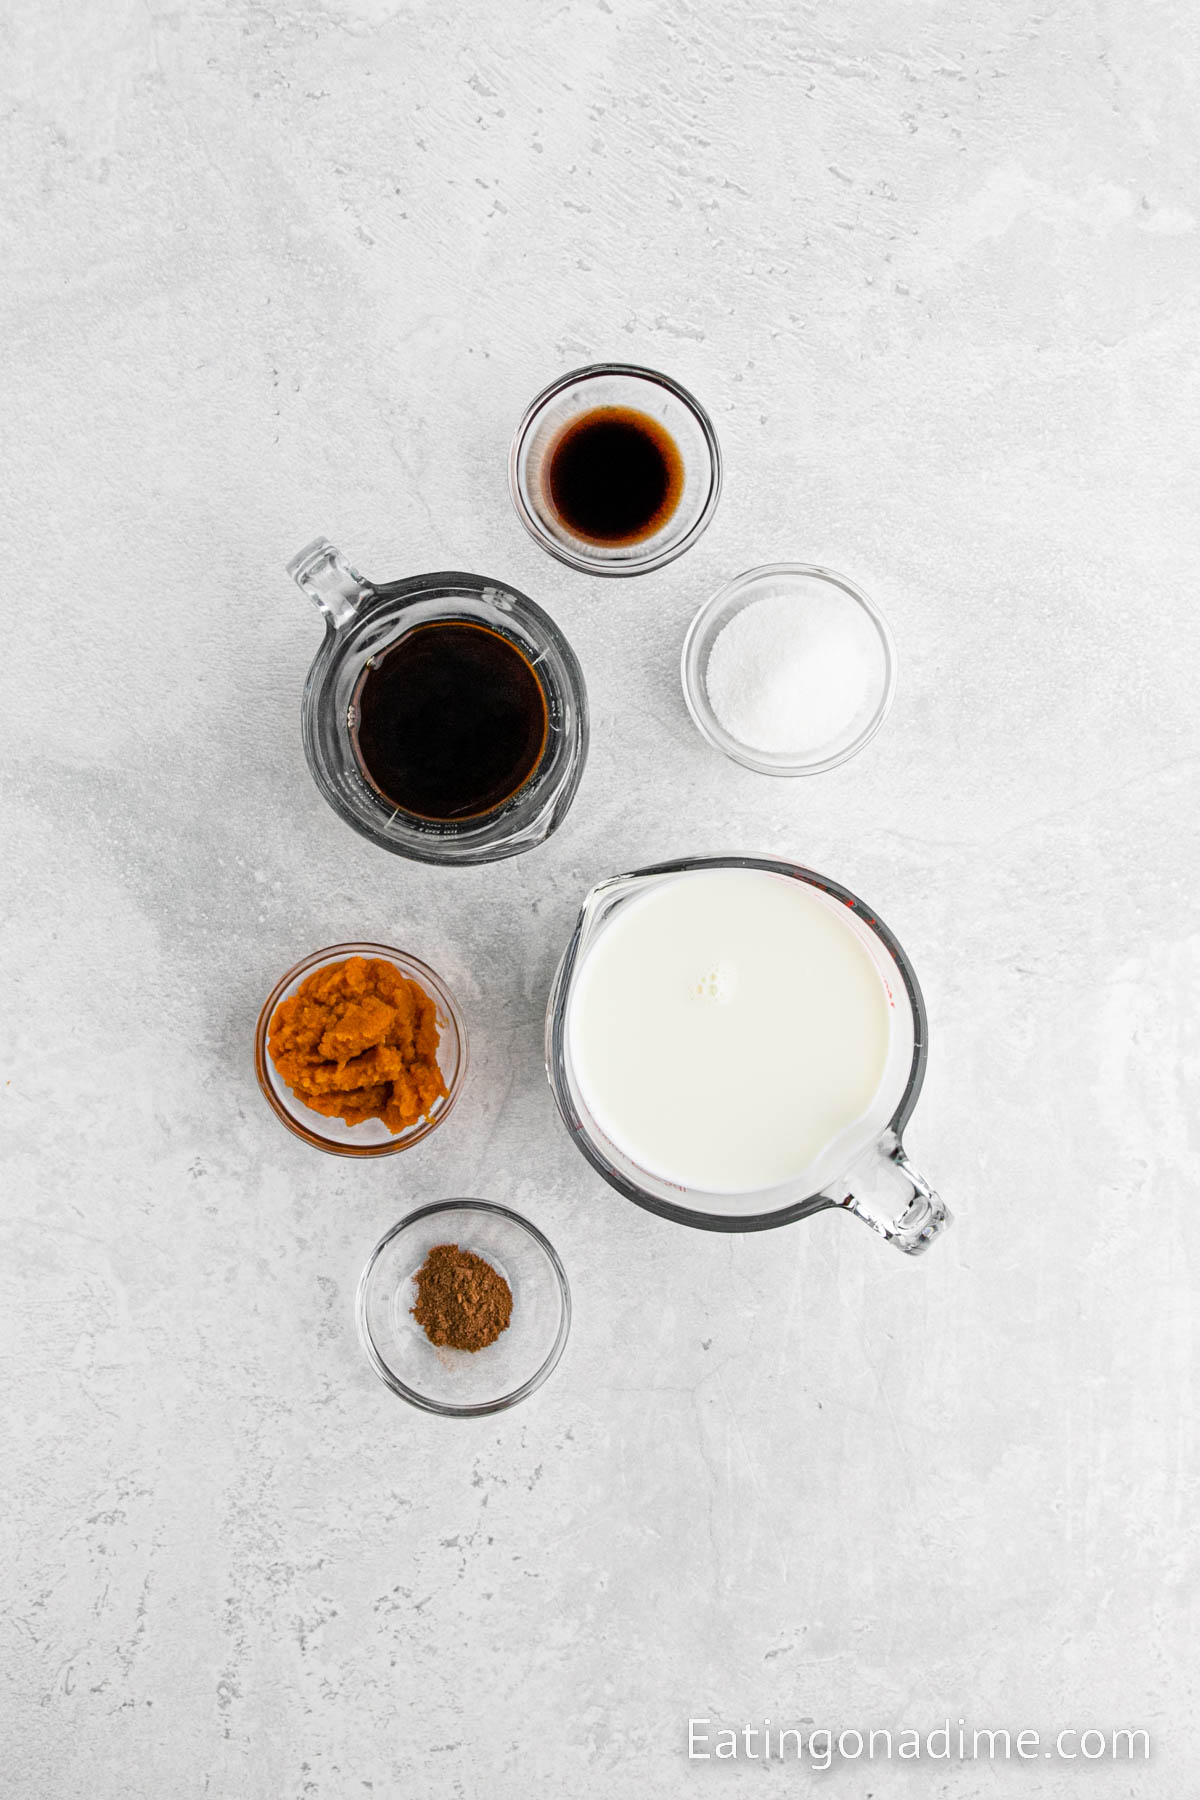 Ingredients needed for pumpkin spice latte